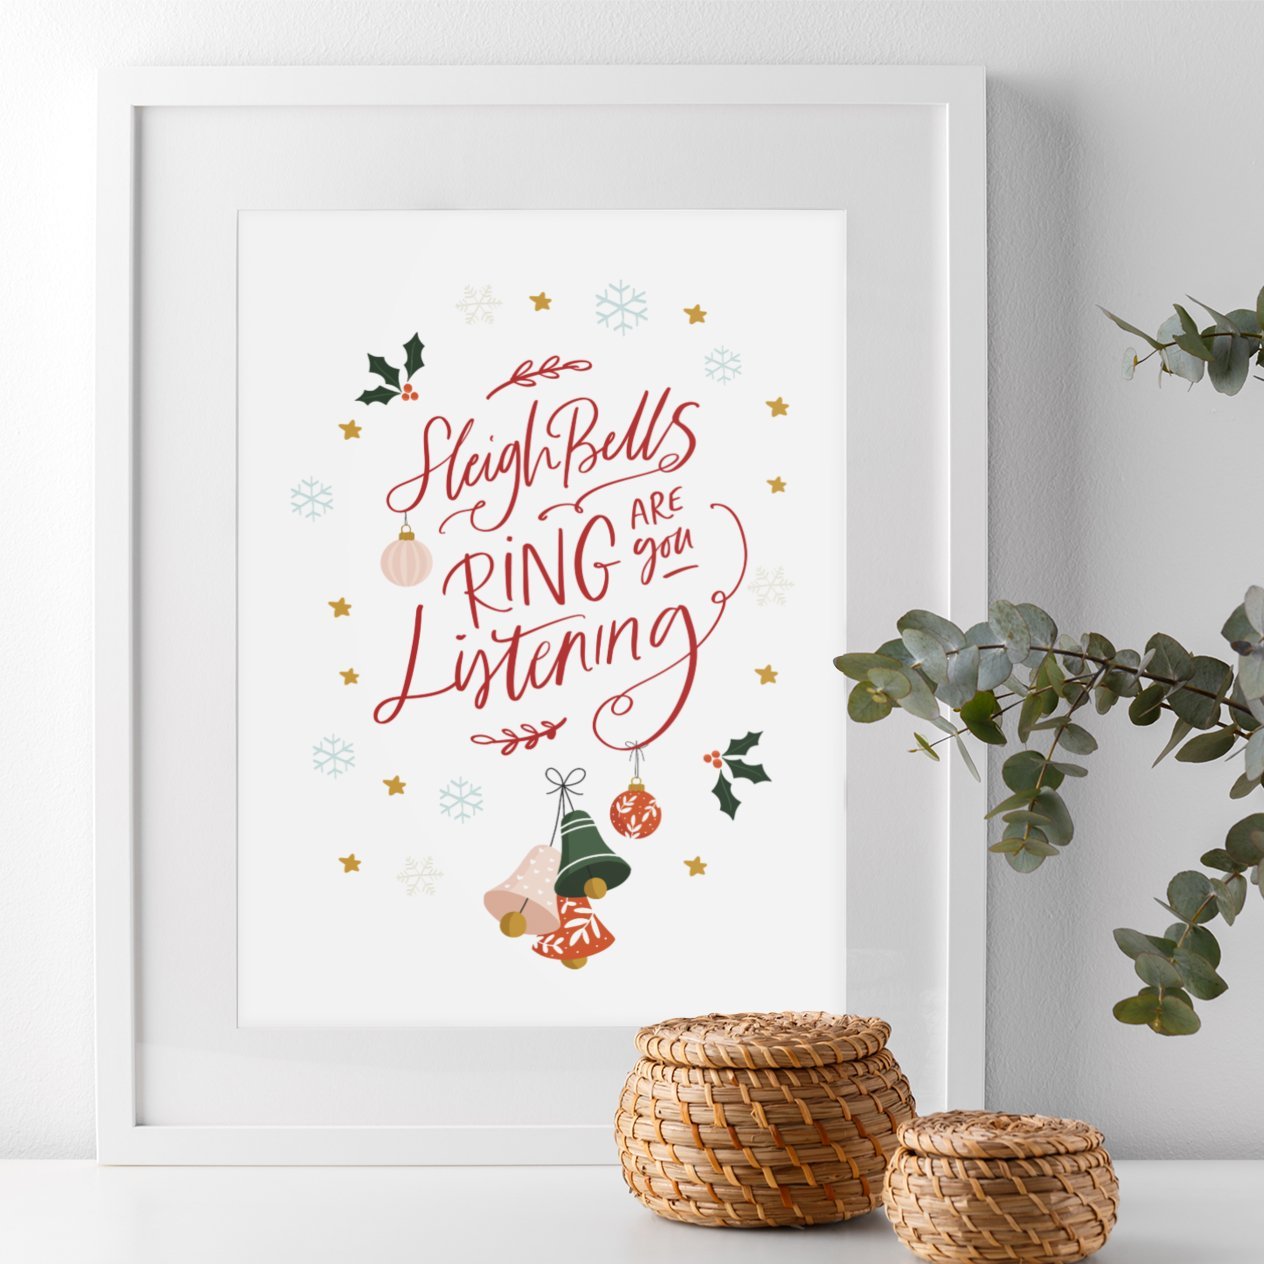 Sleigh Bells Ring are you Listening Art Print | Natalie Ryan Design